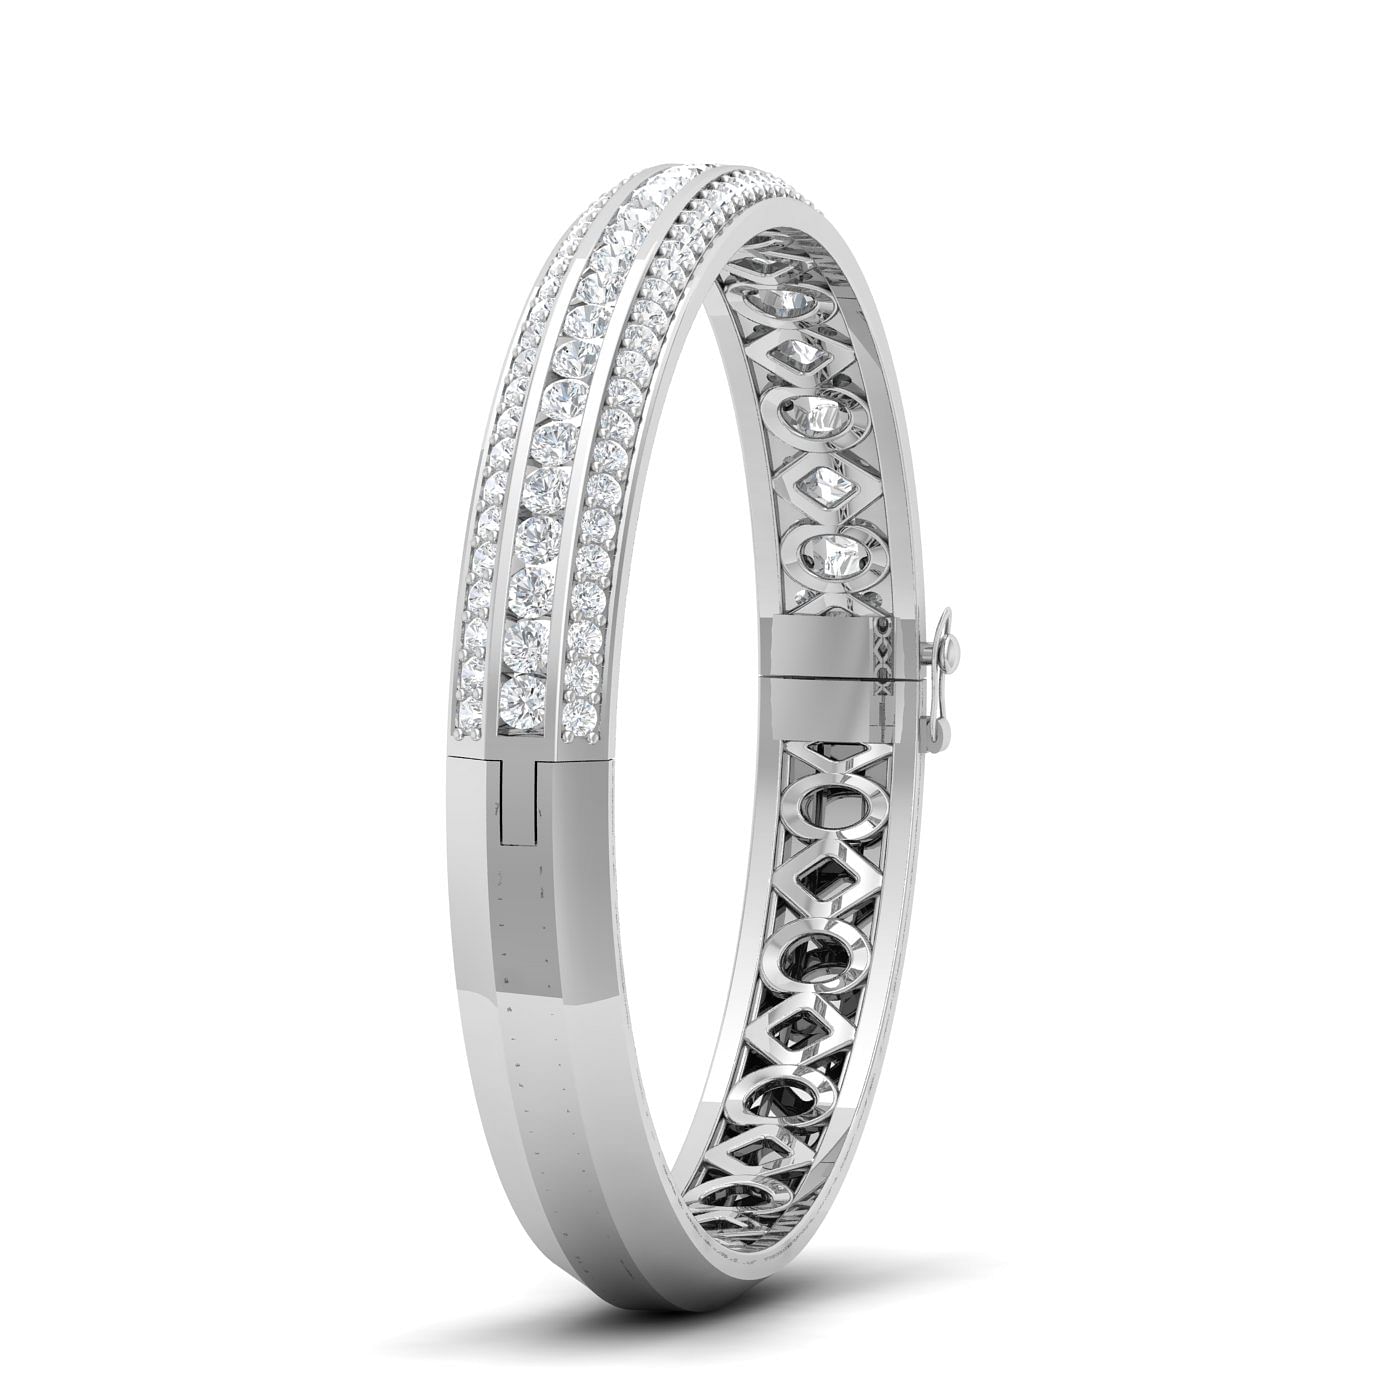 White gold Adya Cluster Diamond Bracelet for bridal wedding